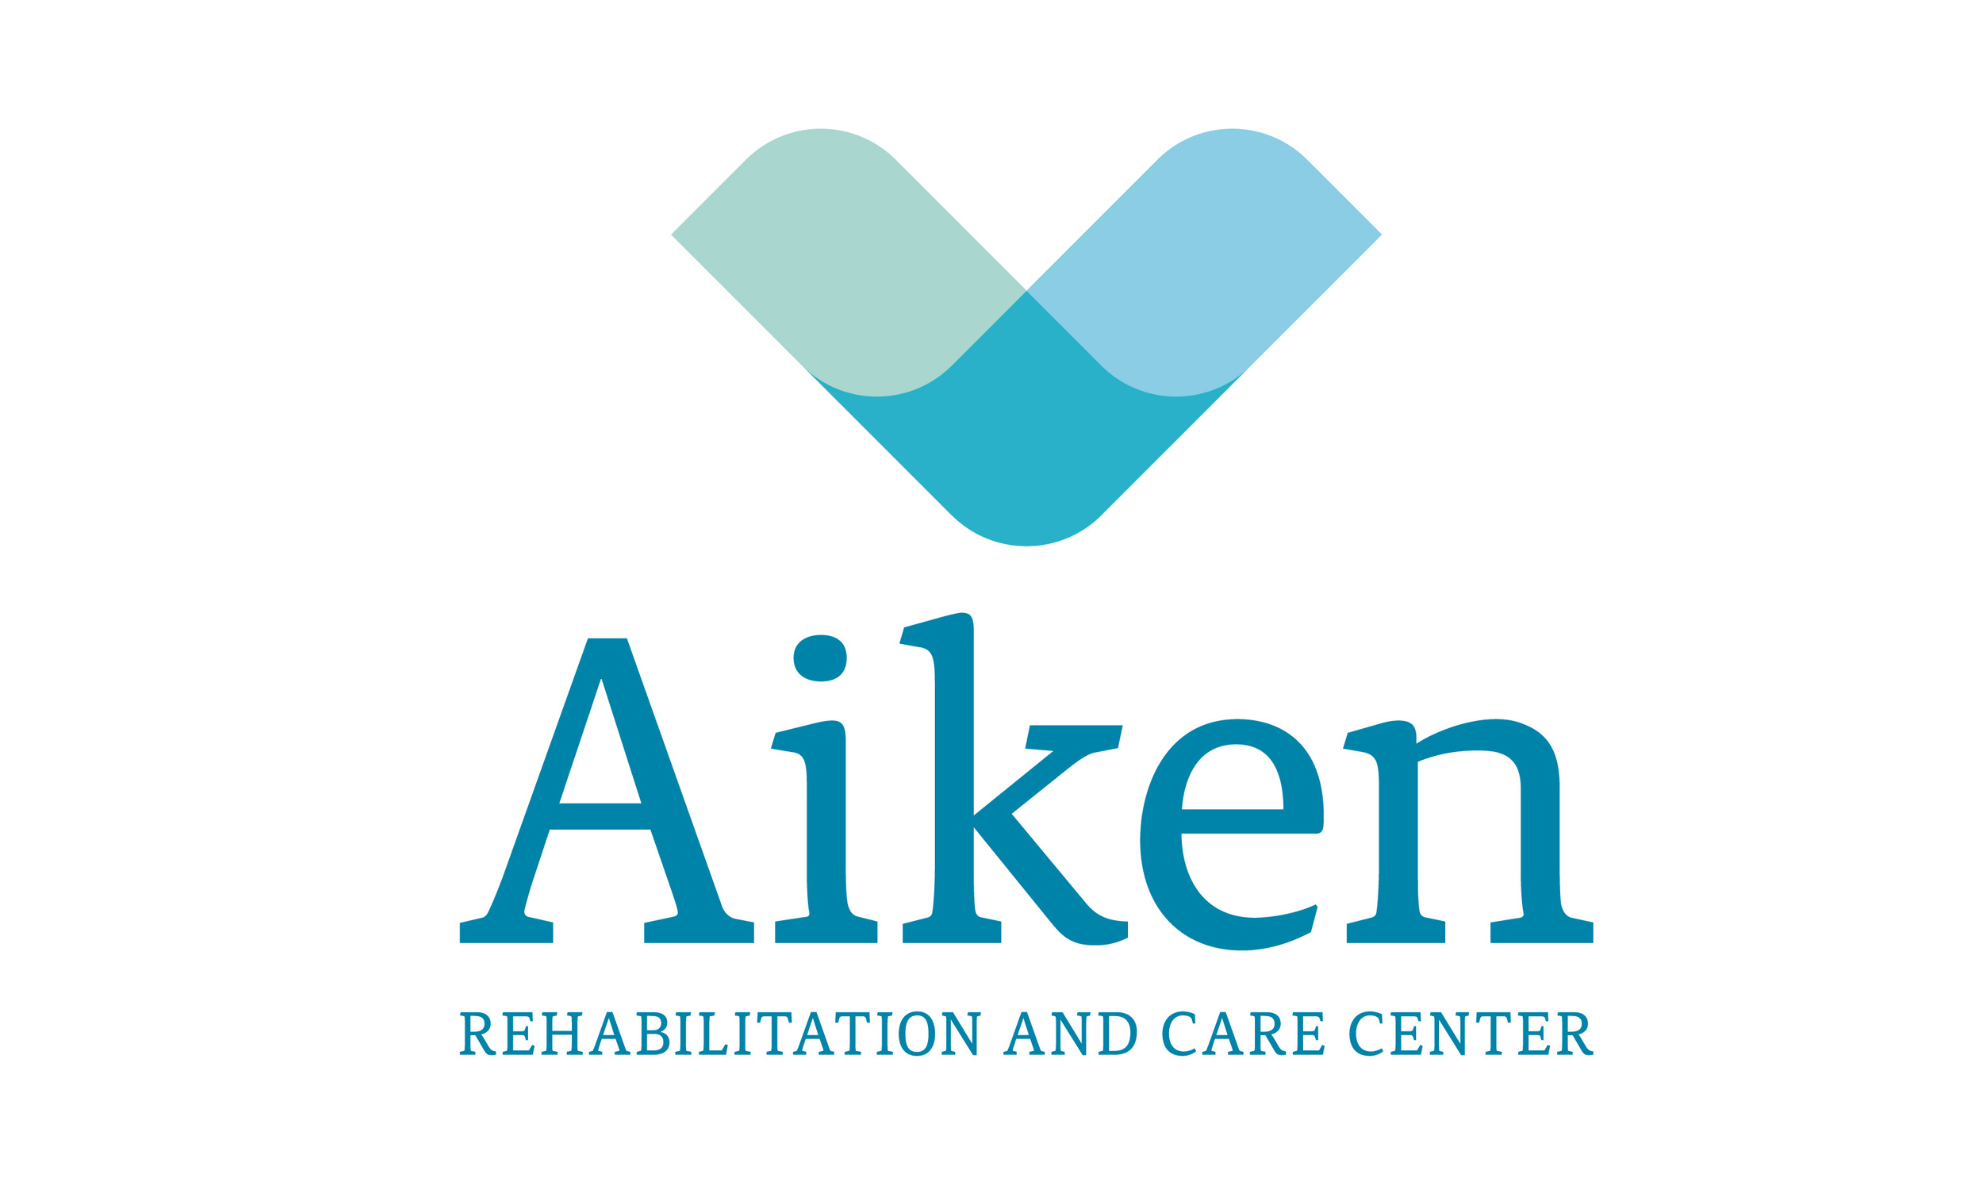 Aiken Rehabilitation and Care Center Company Logo